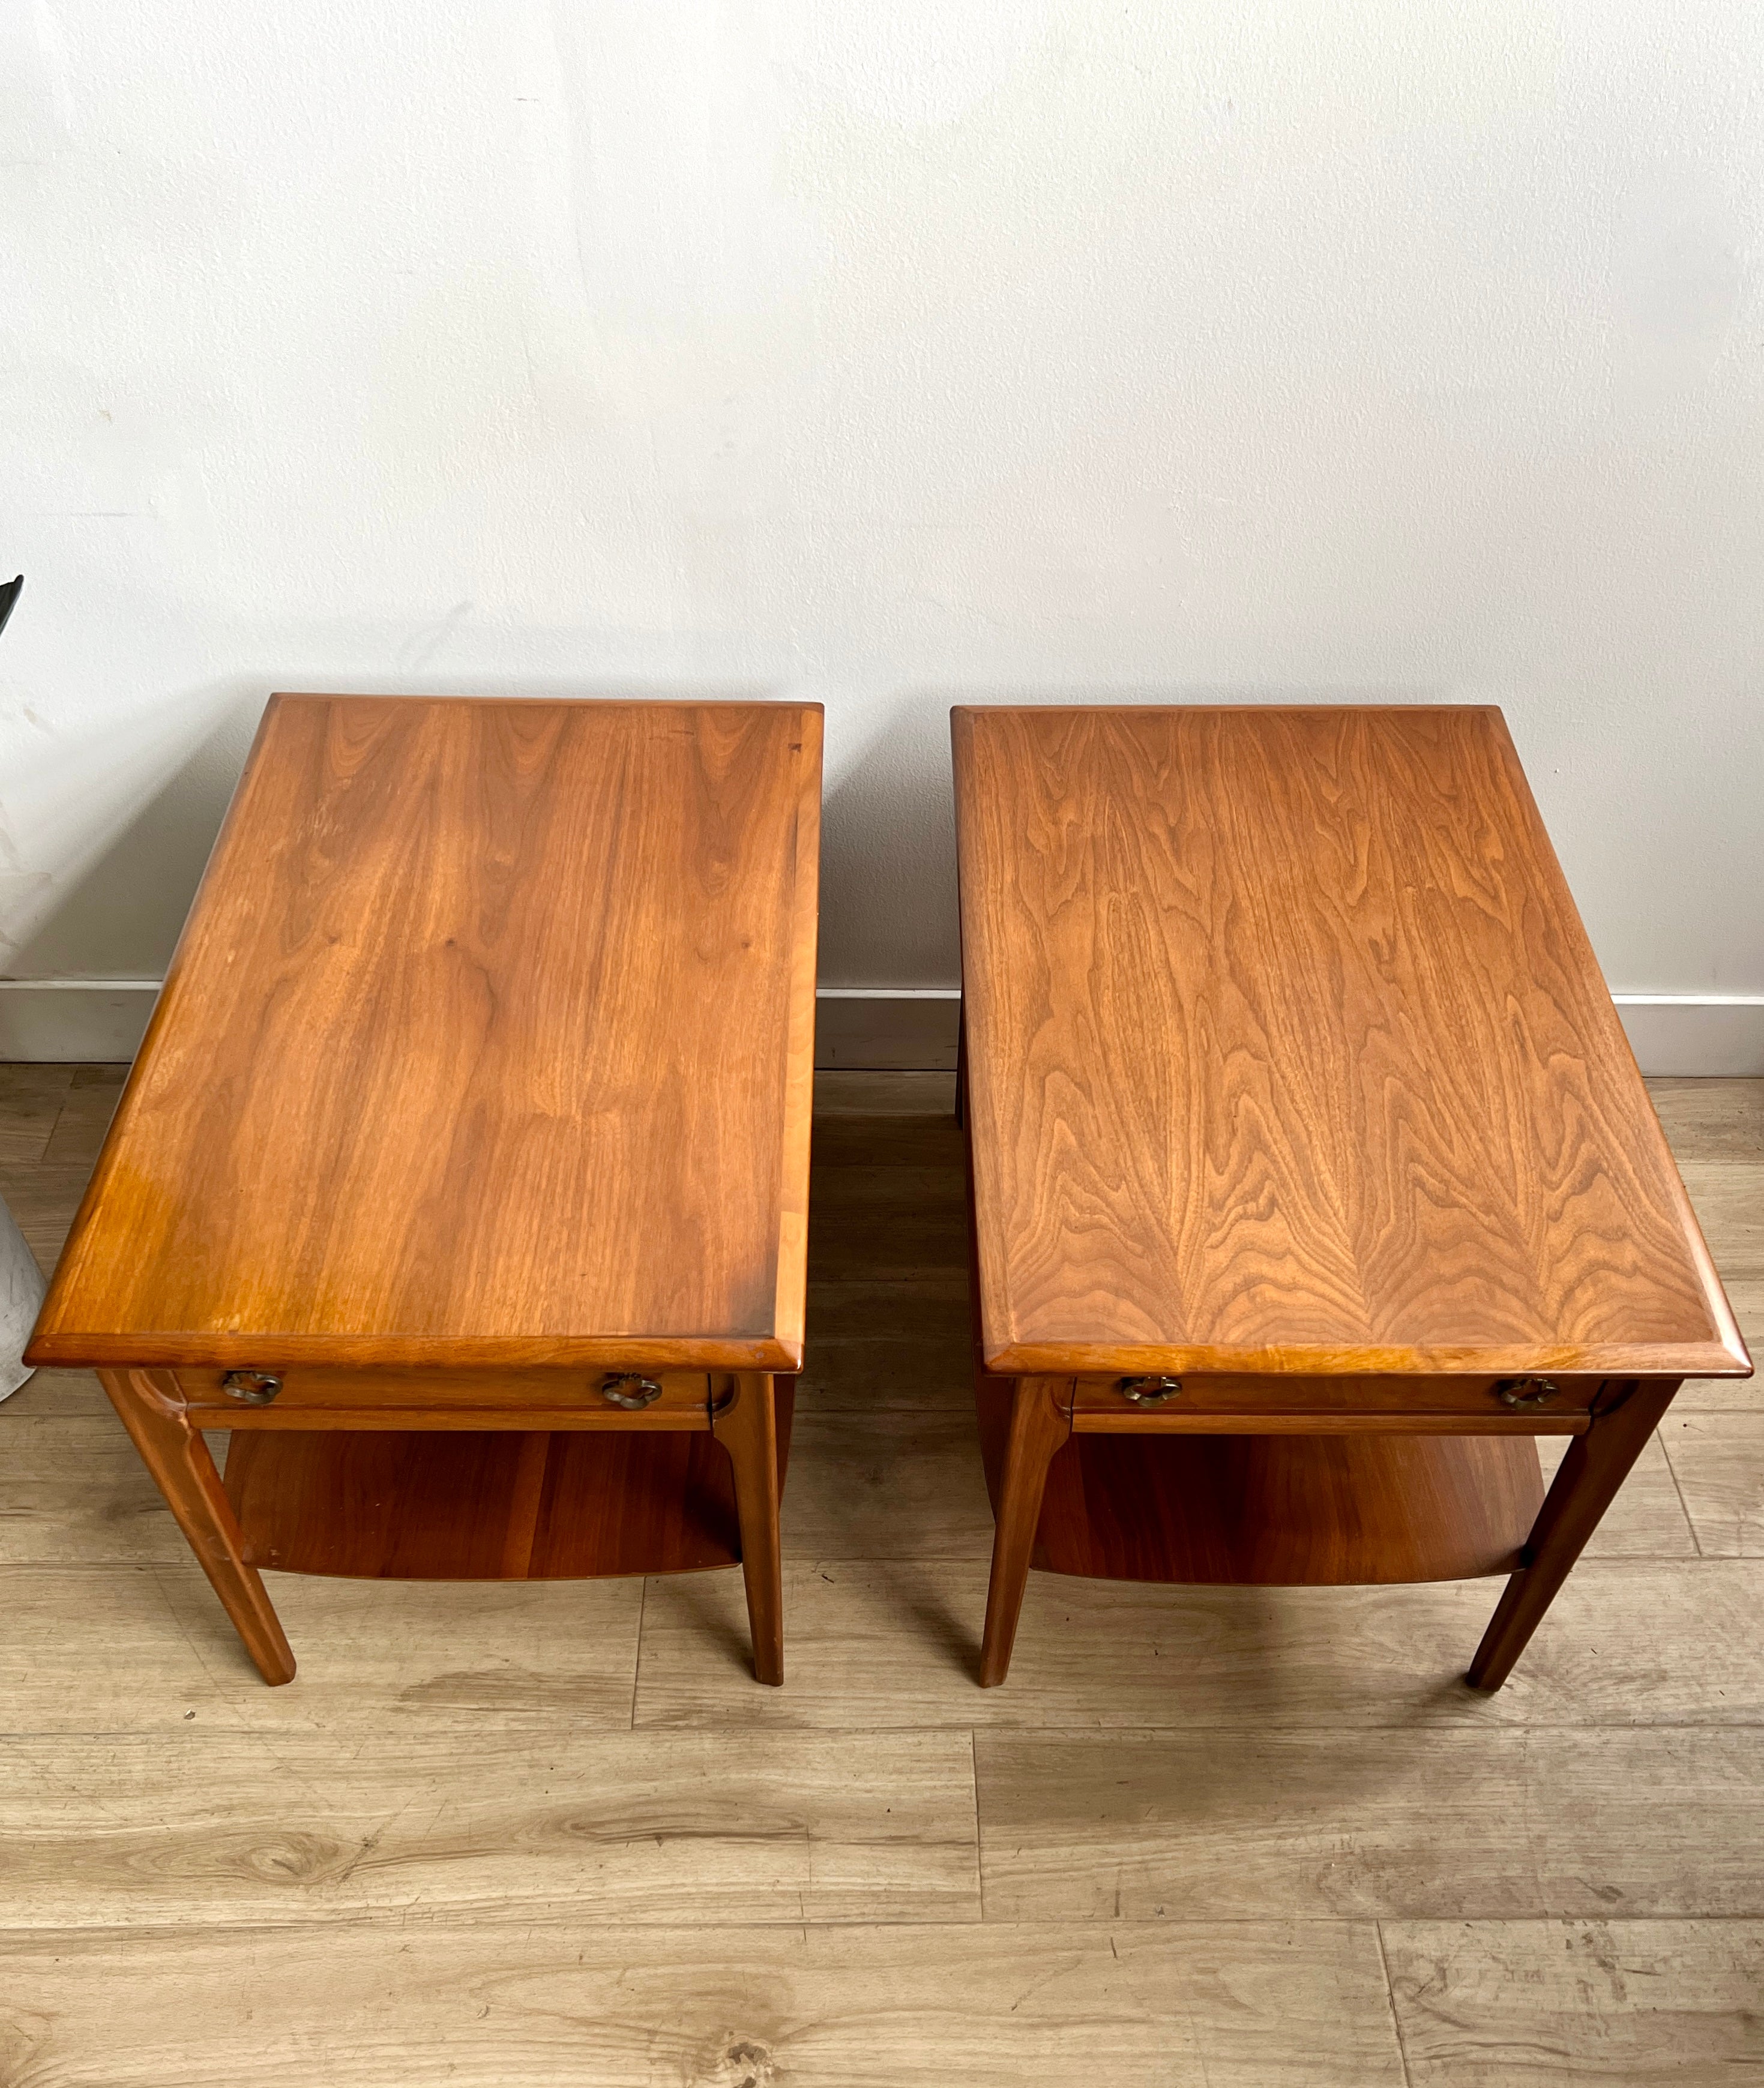 Pair of Vintage Mid Century Nightstands / End Tables